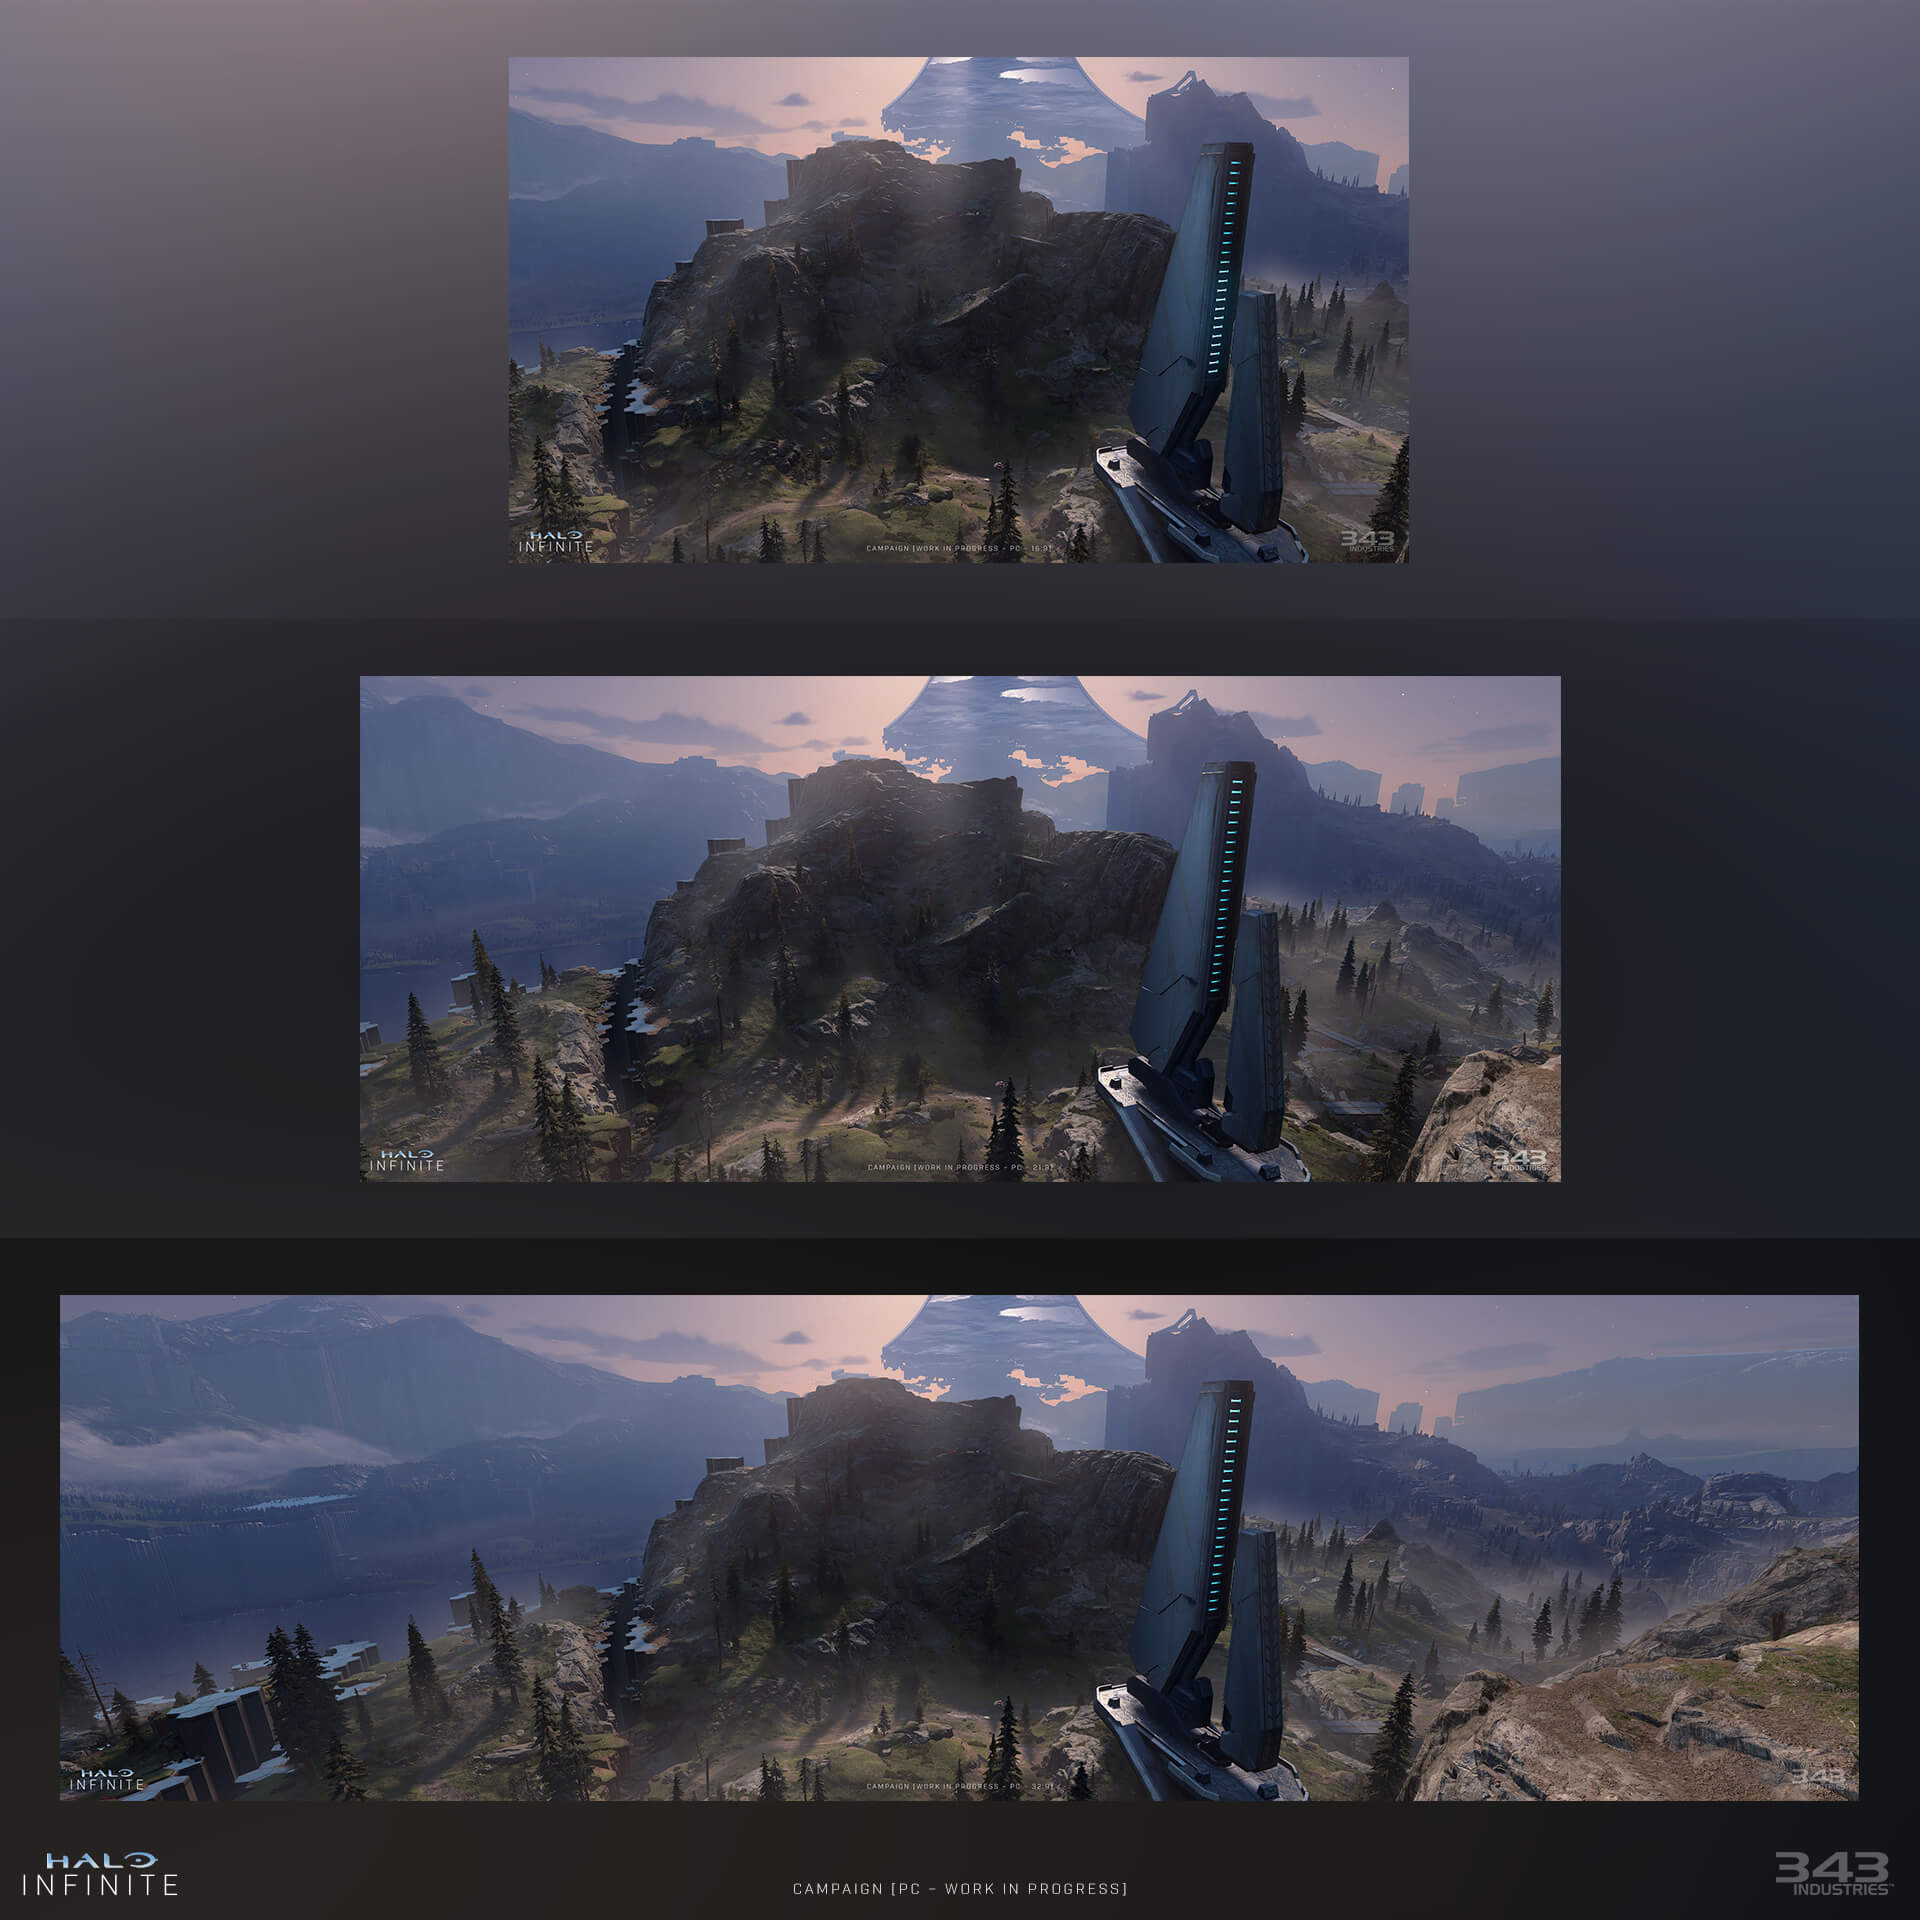 Halo Infinite 343 Industries divulga novas imagens gameplay